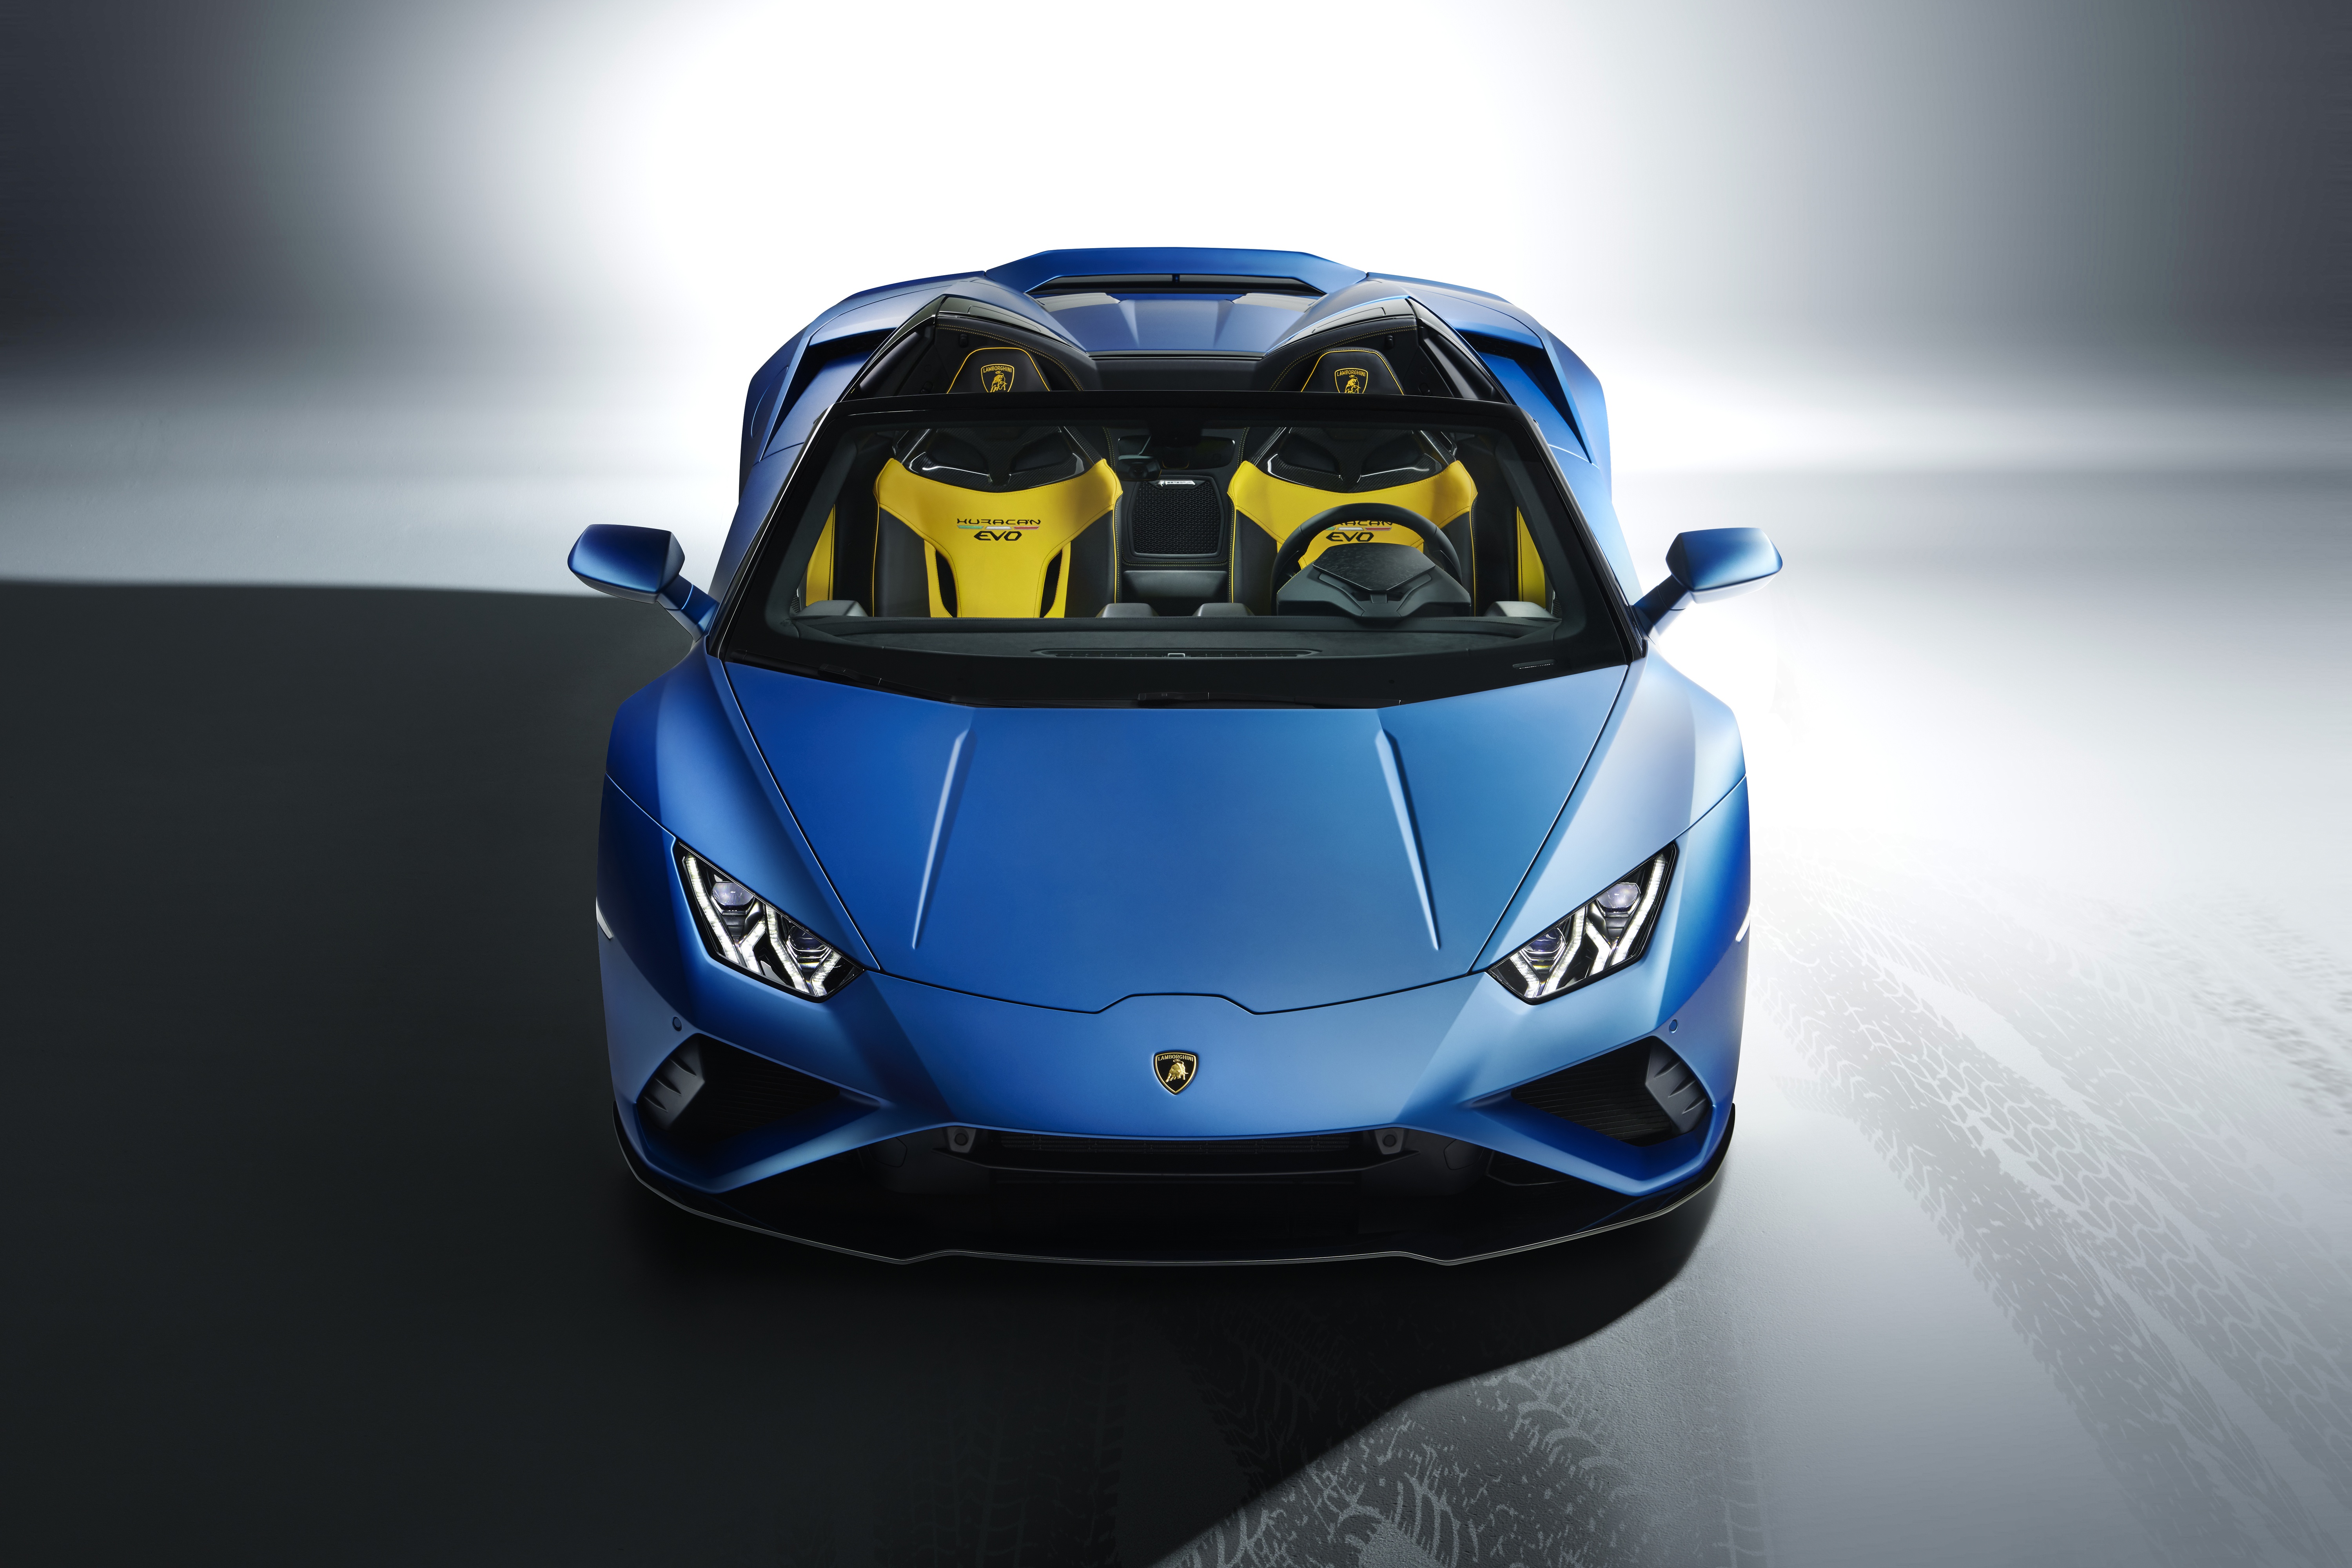 Baixe gratuitamente a imagem Lamborghini, Carro, Super Carro, Lamborghini Huracan, Veículos, Lamborghini Huracán Evo na área de trabalho do seu PC